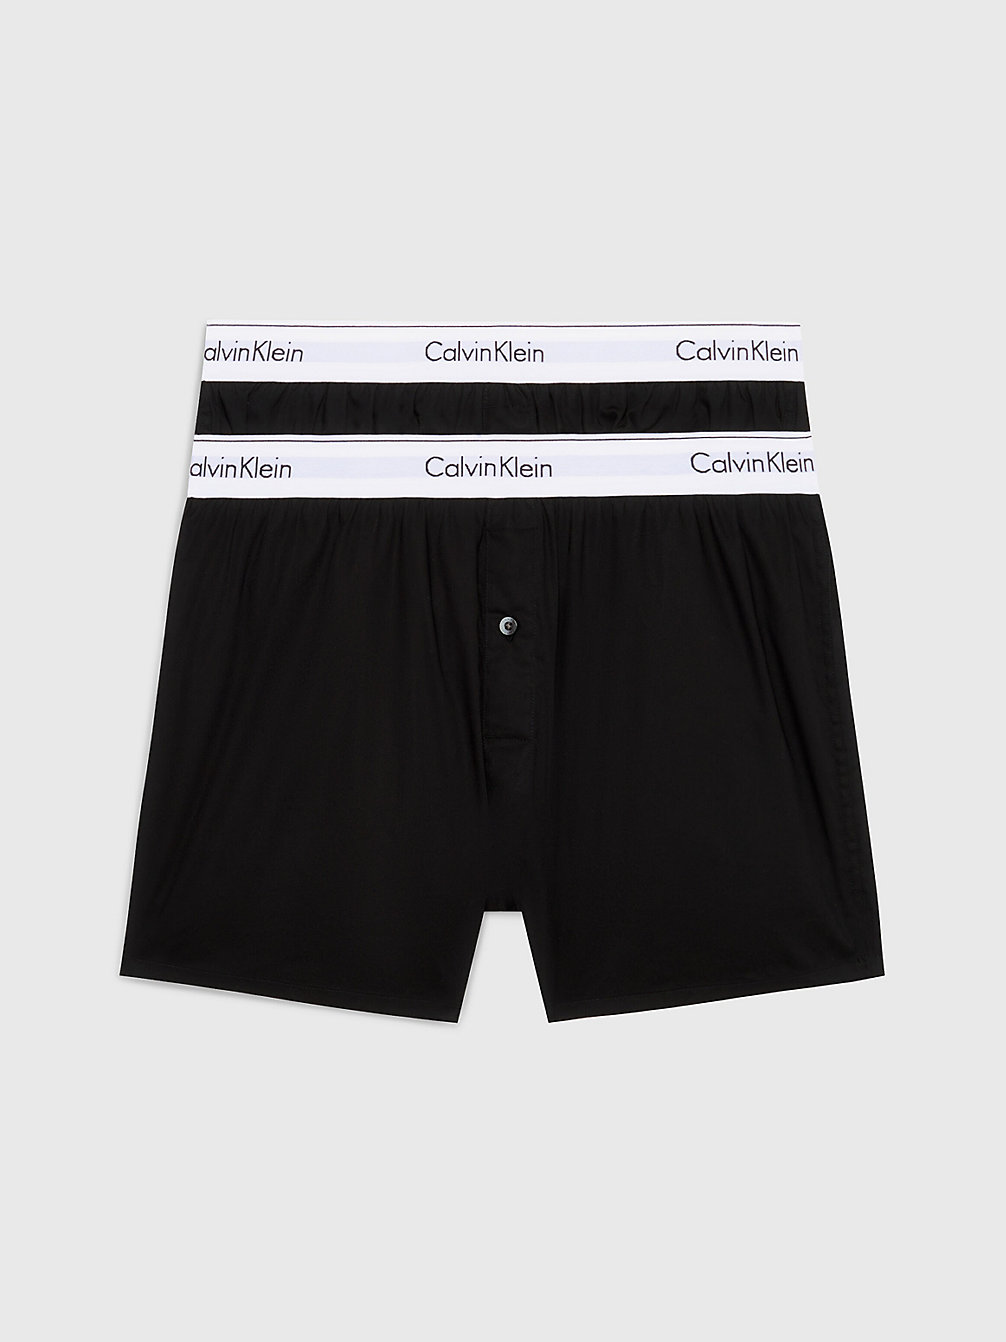 BLACK/BLACK > 2er-Pack Slim Fit Boxershorts - Modern Cotton > undefined Herren - Calvin Klein